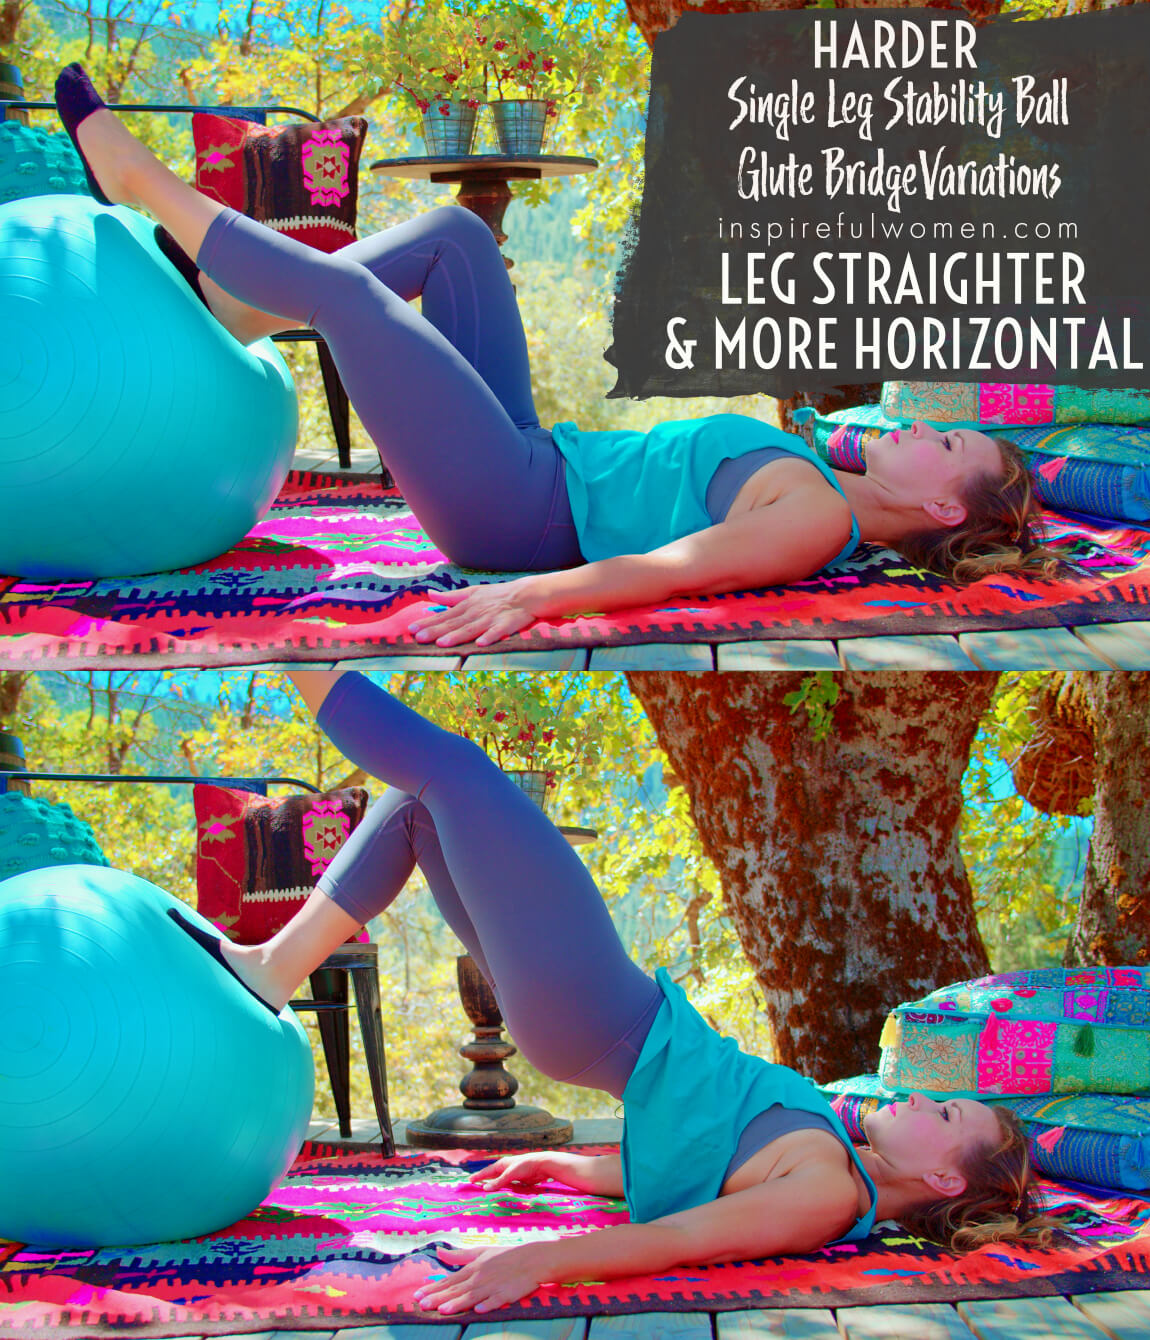 leg-straighter-and-more-horizontal-single-leg-stability-ball-glute-bridge-exercise-harder